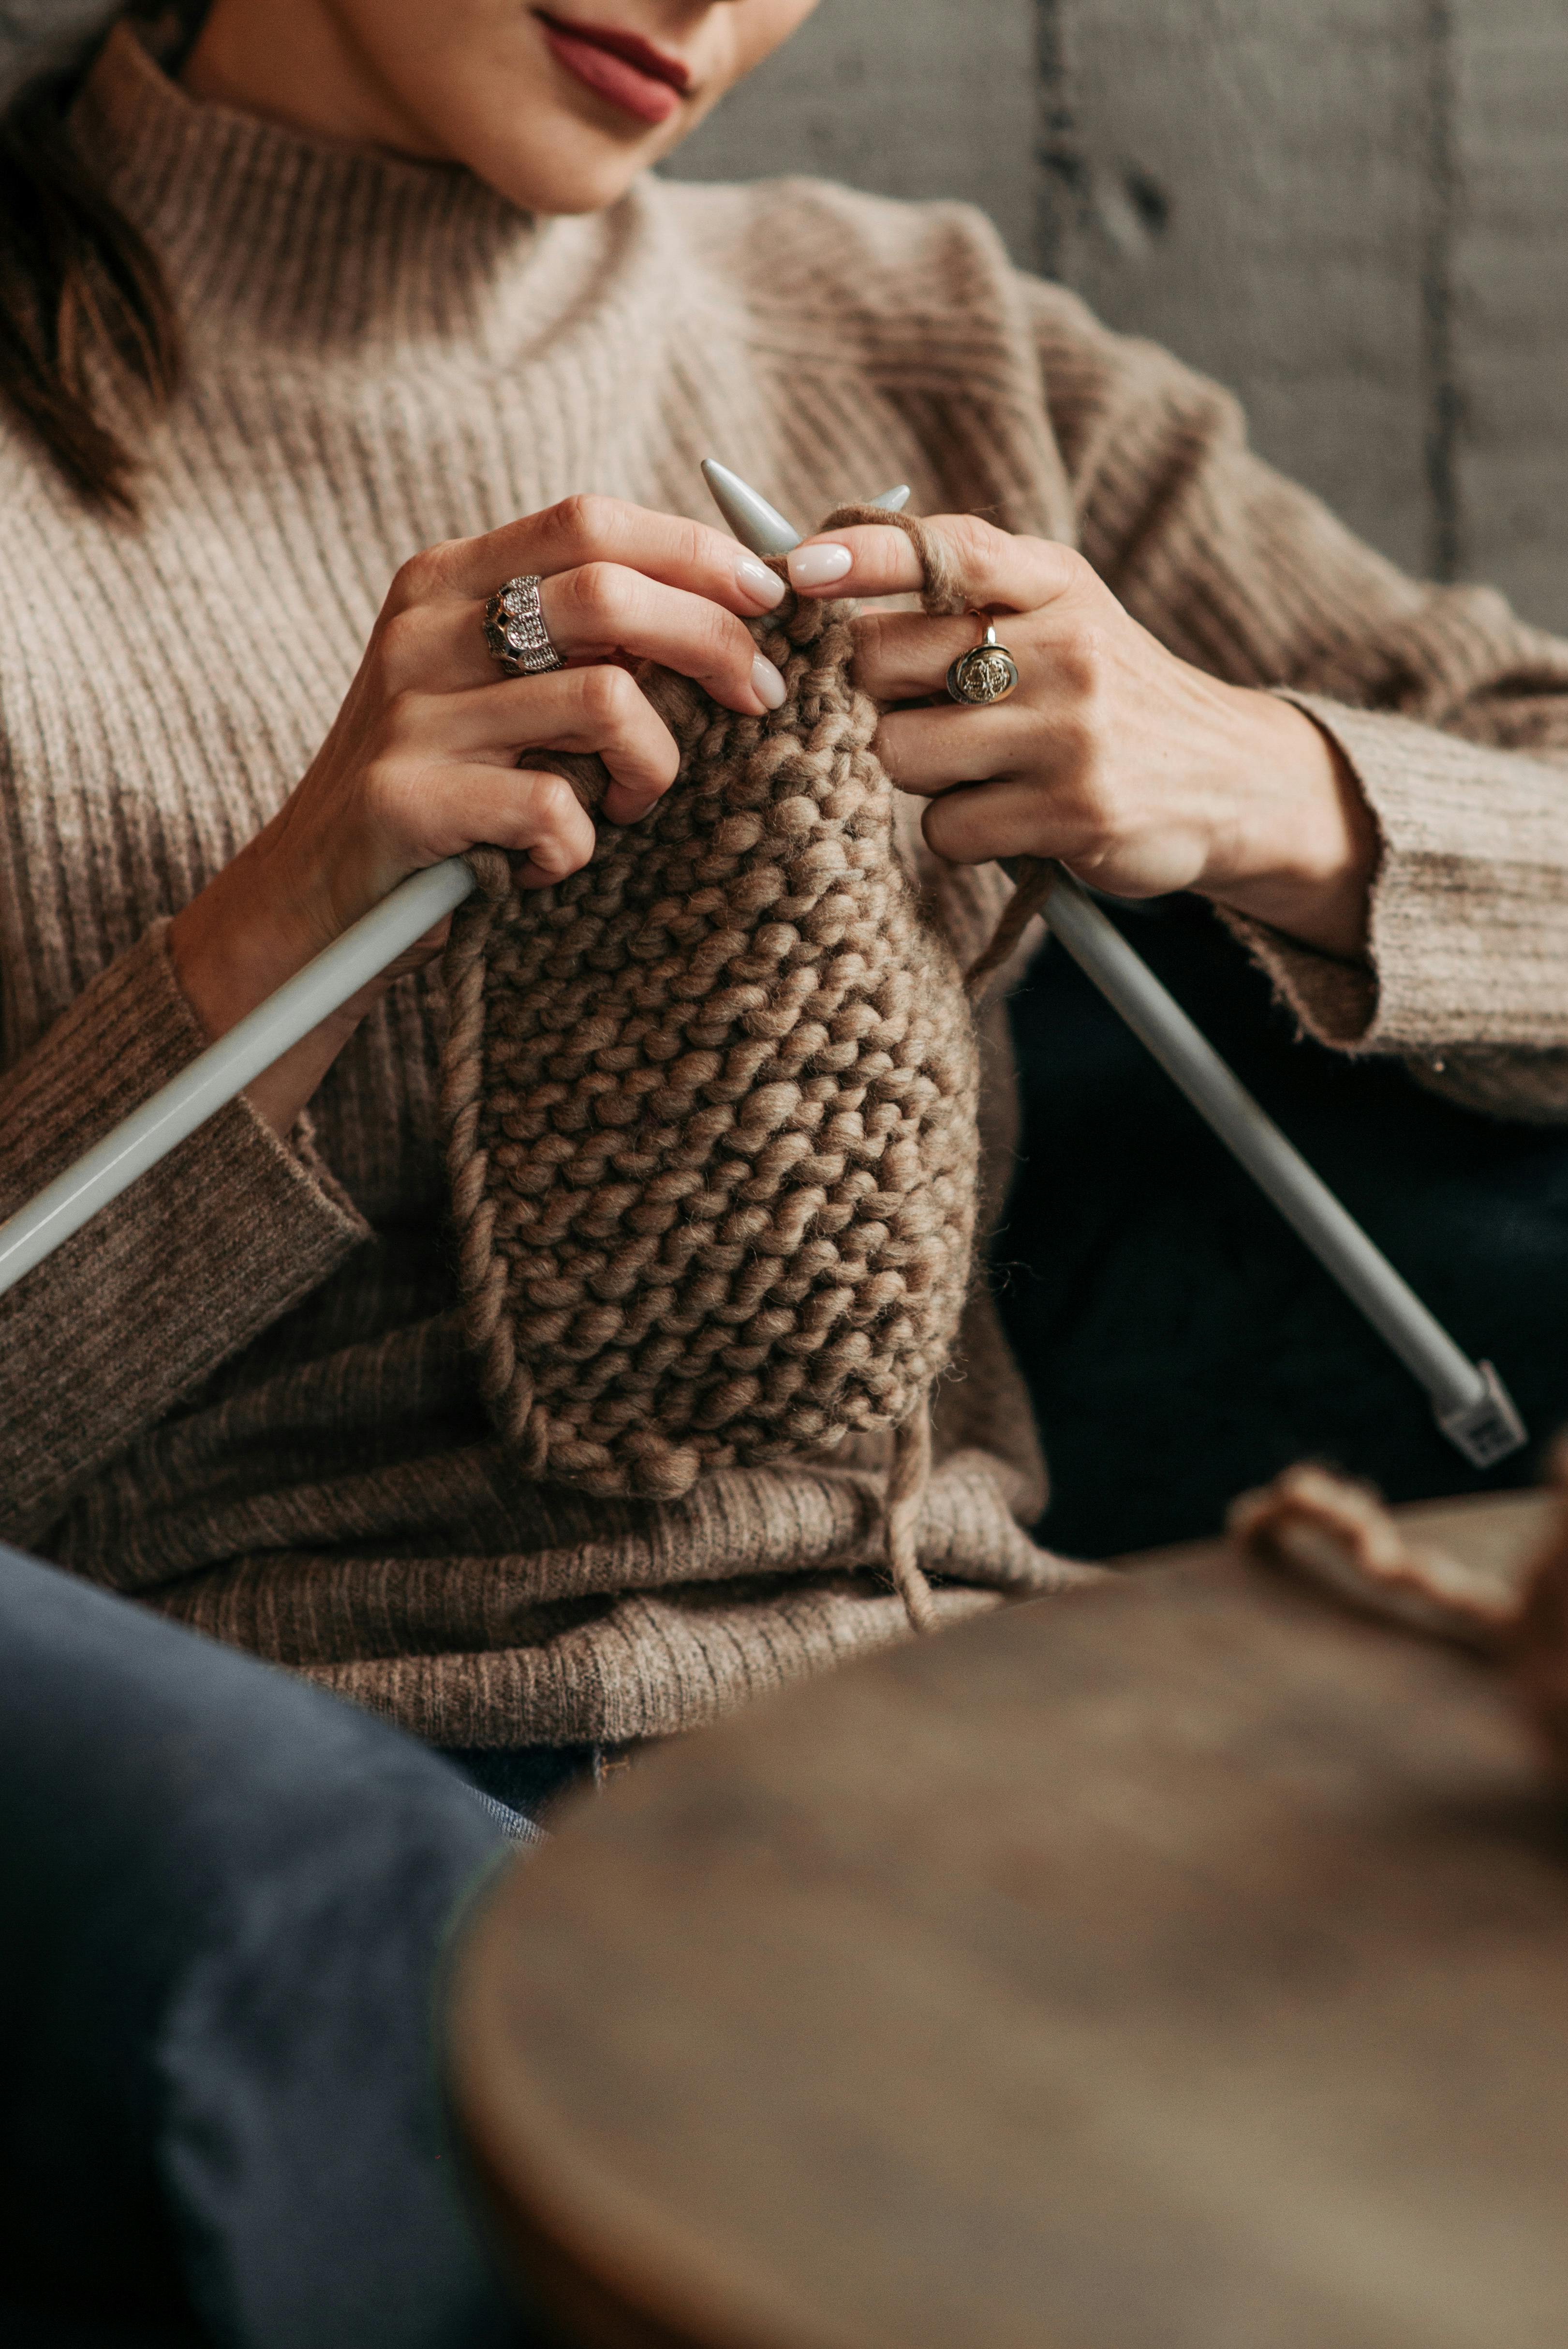 A woman knitting | Source: Pexels